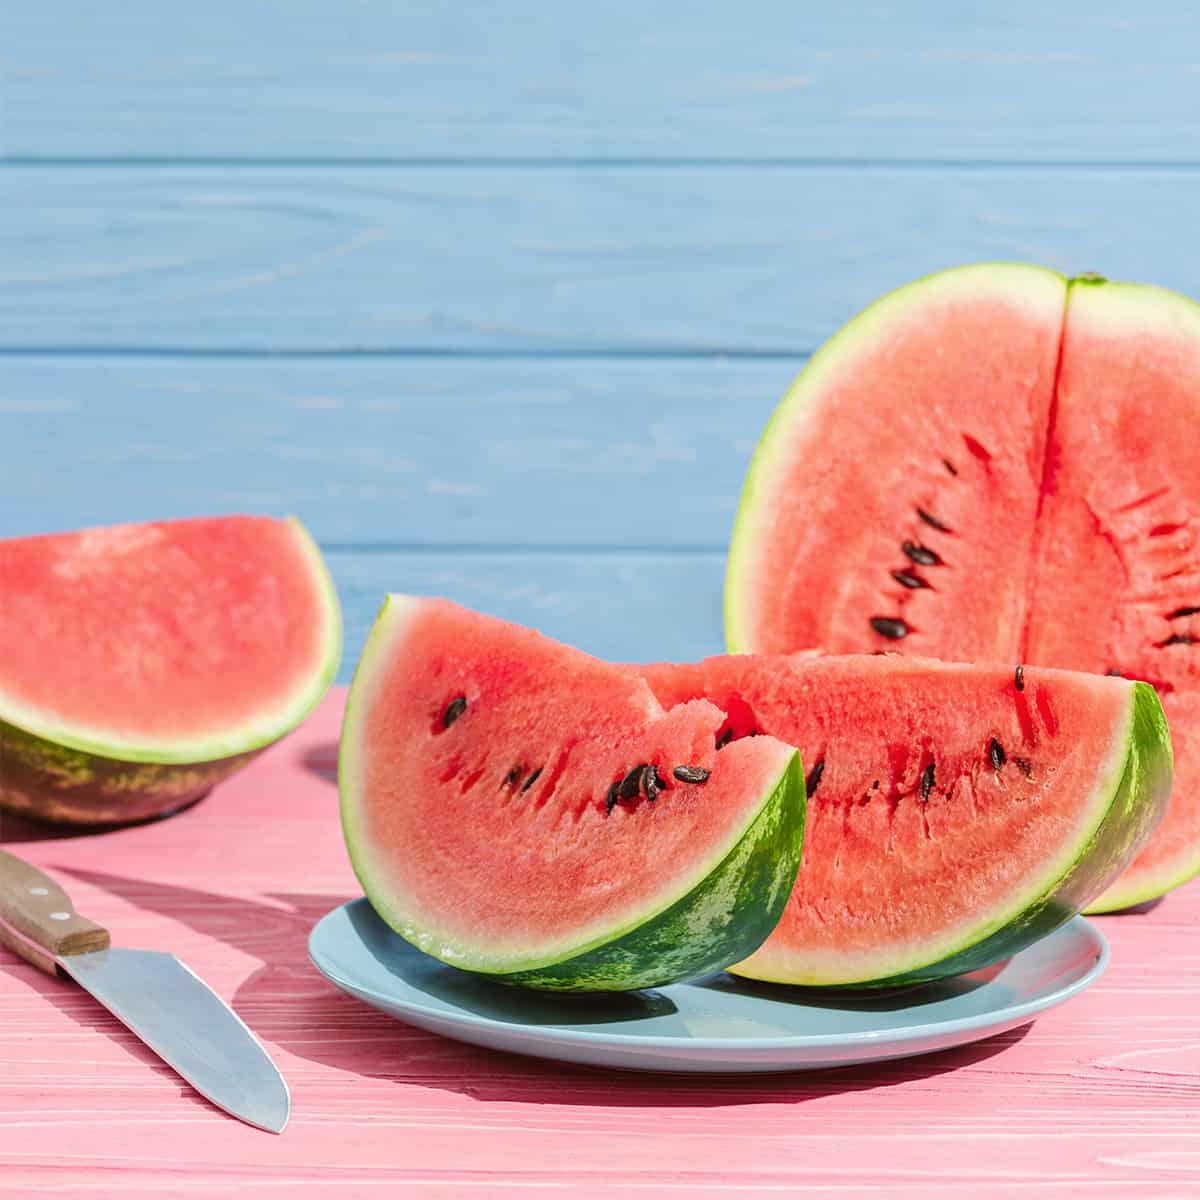 Watermelon sliced, halfed, and served on blue dinnerware